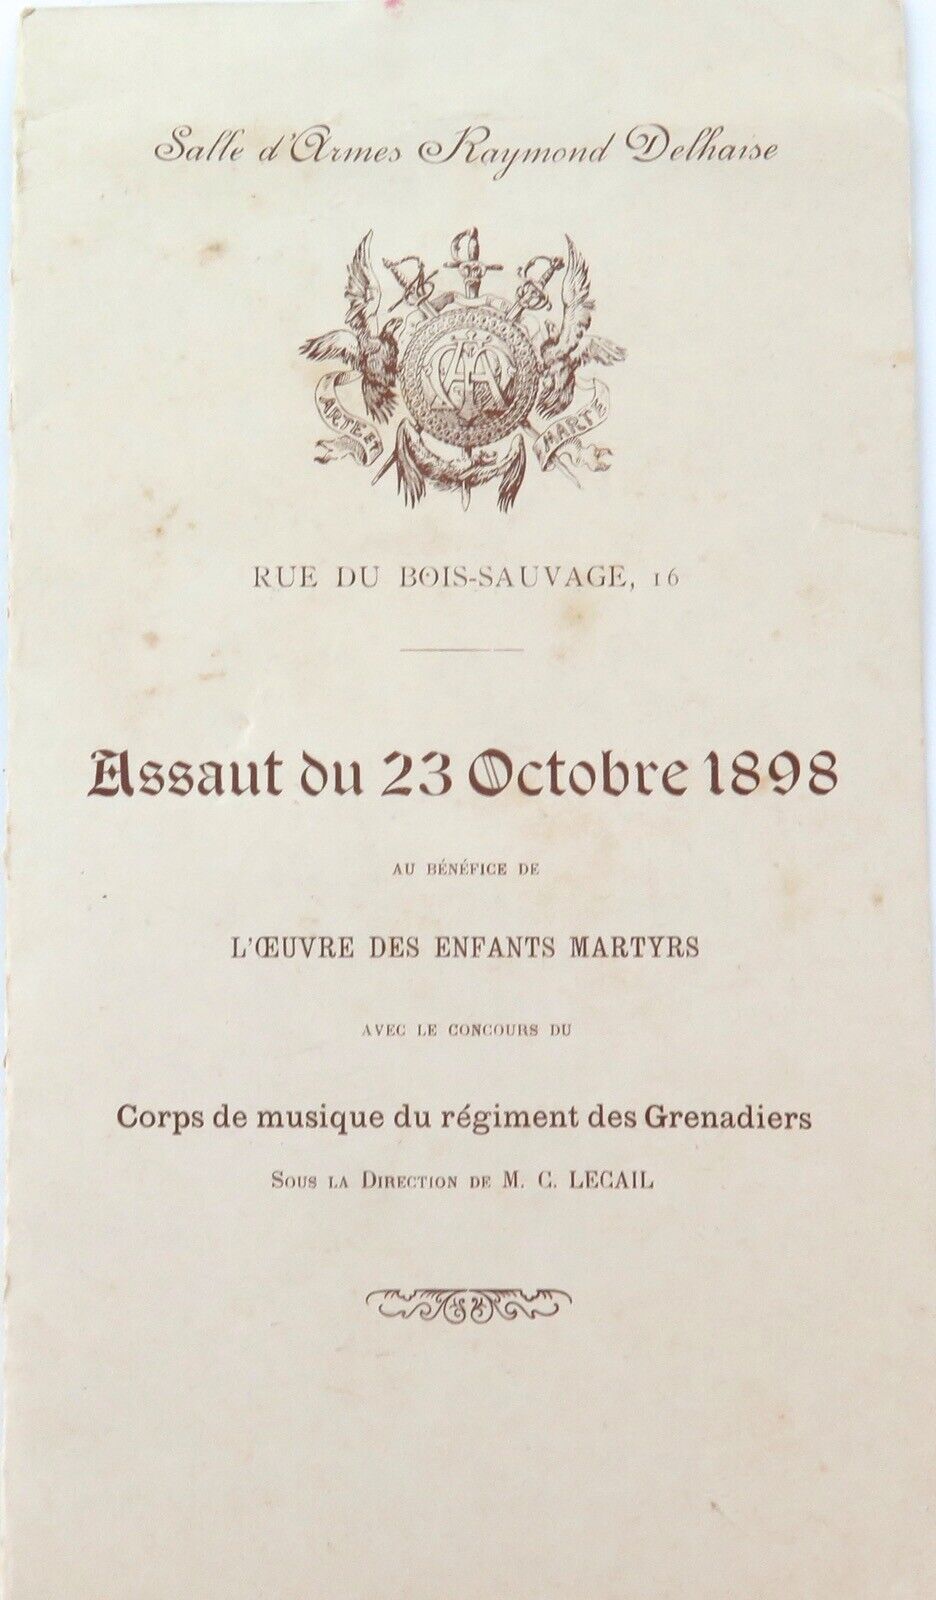 c1900 Rare Brussels, Belgium Theatre Programme. “Assaut du 23 Octobre 1898\